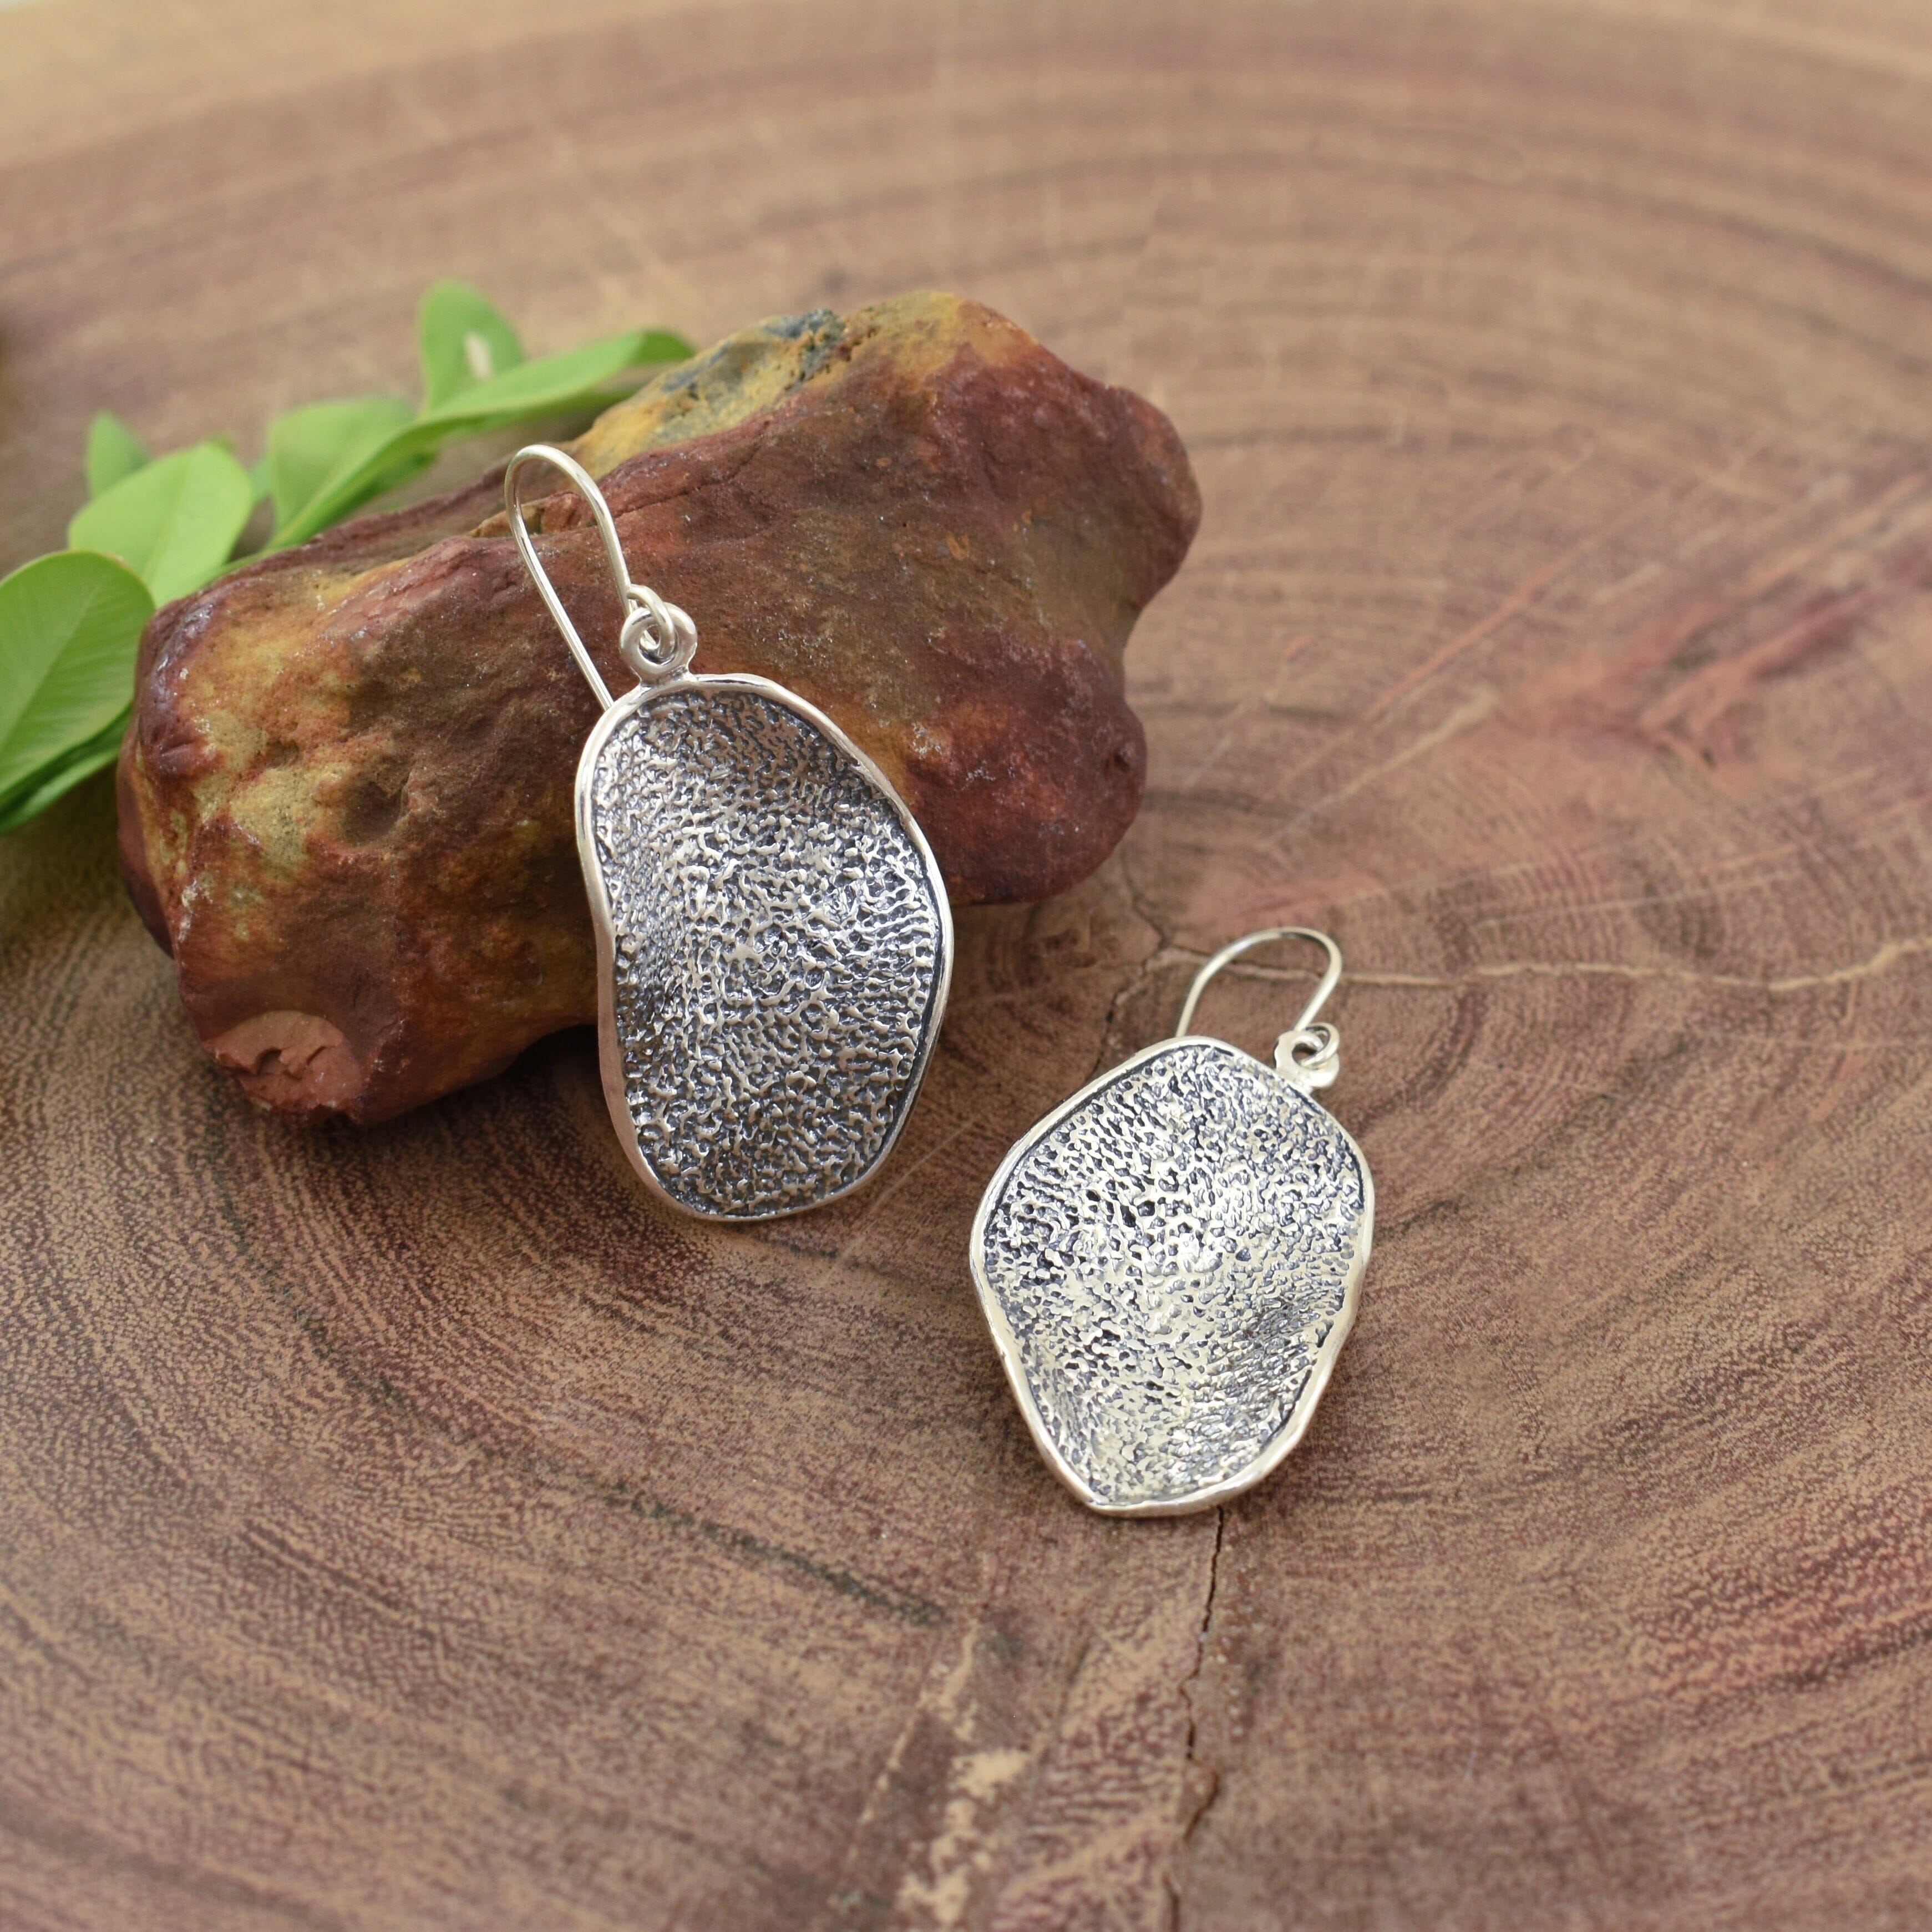 .925 sterling silver earrings on French hooks